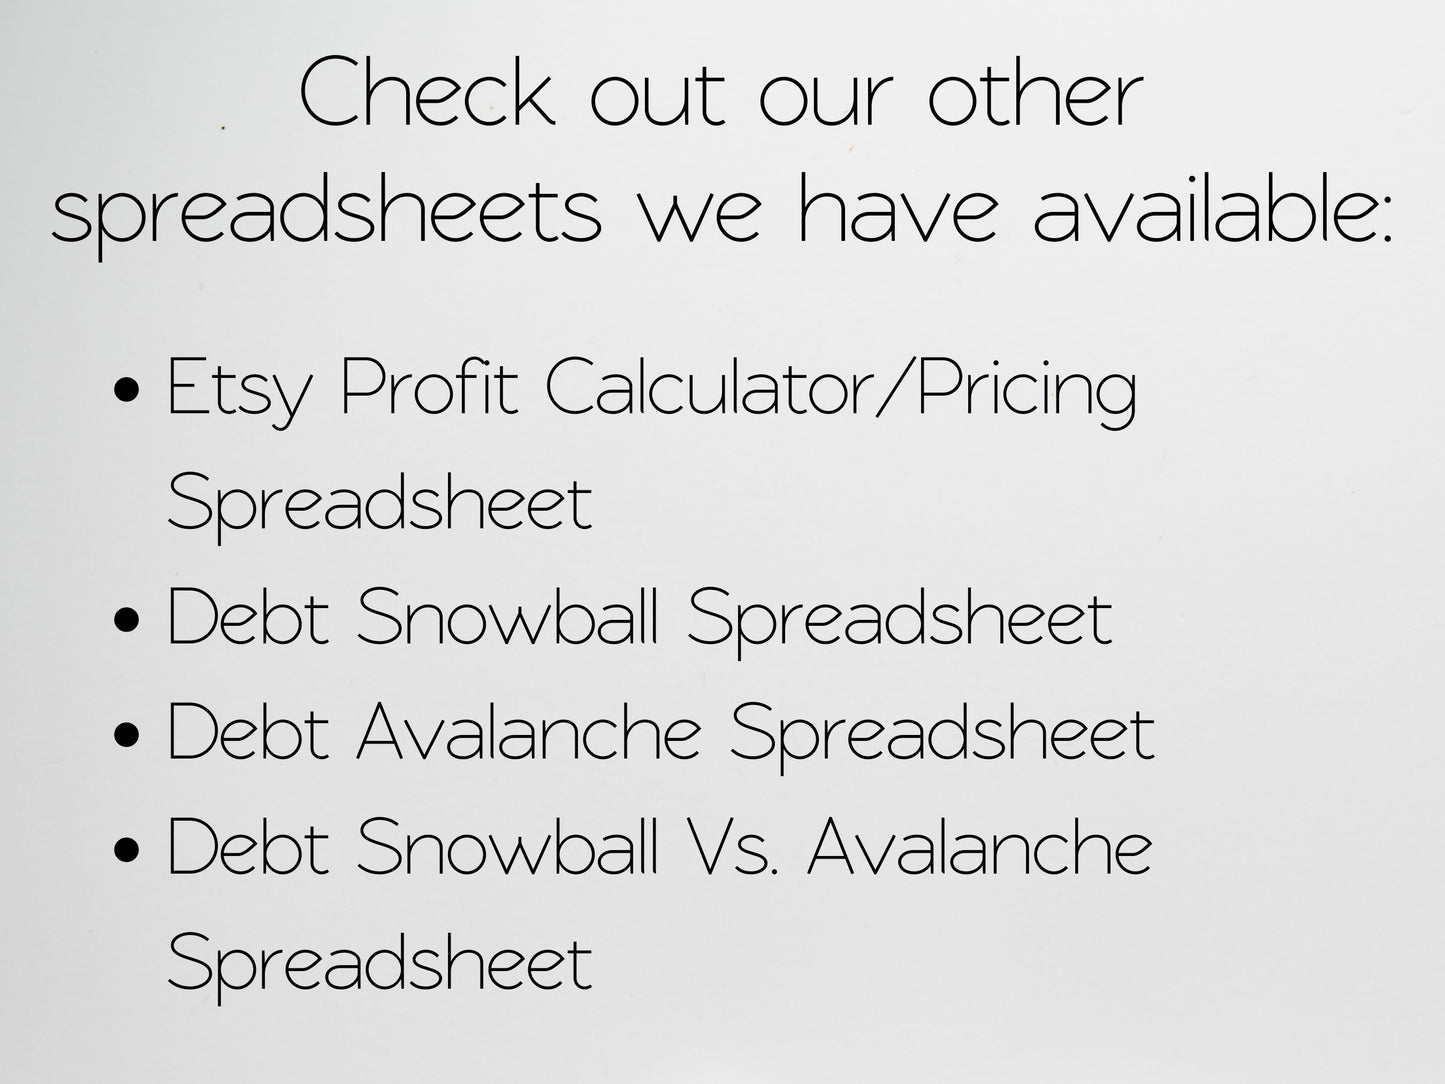 Etsy Profit Calculator, Etsy Fees Calculator, Etsy Profit Margin Calculator - Excel Spreadsheet Google Sheets